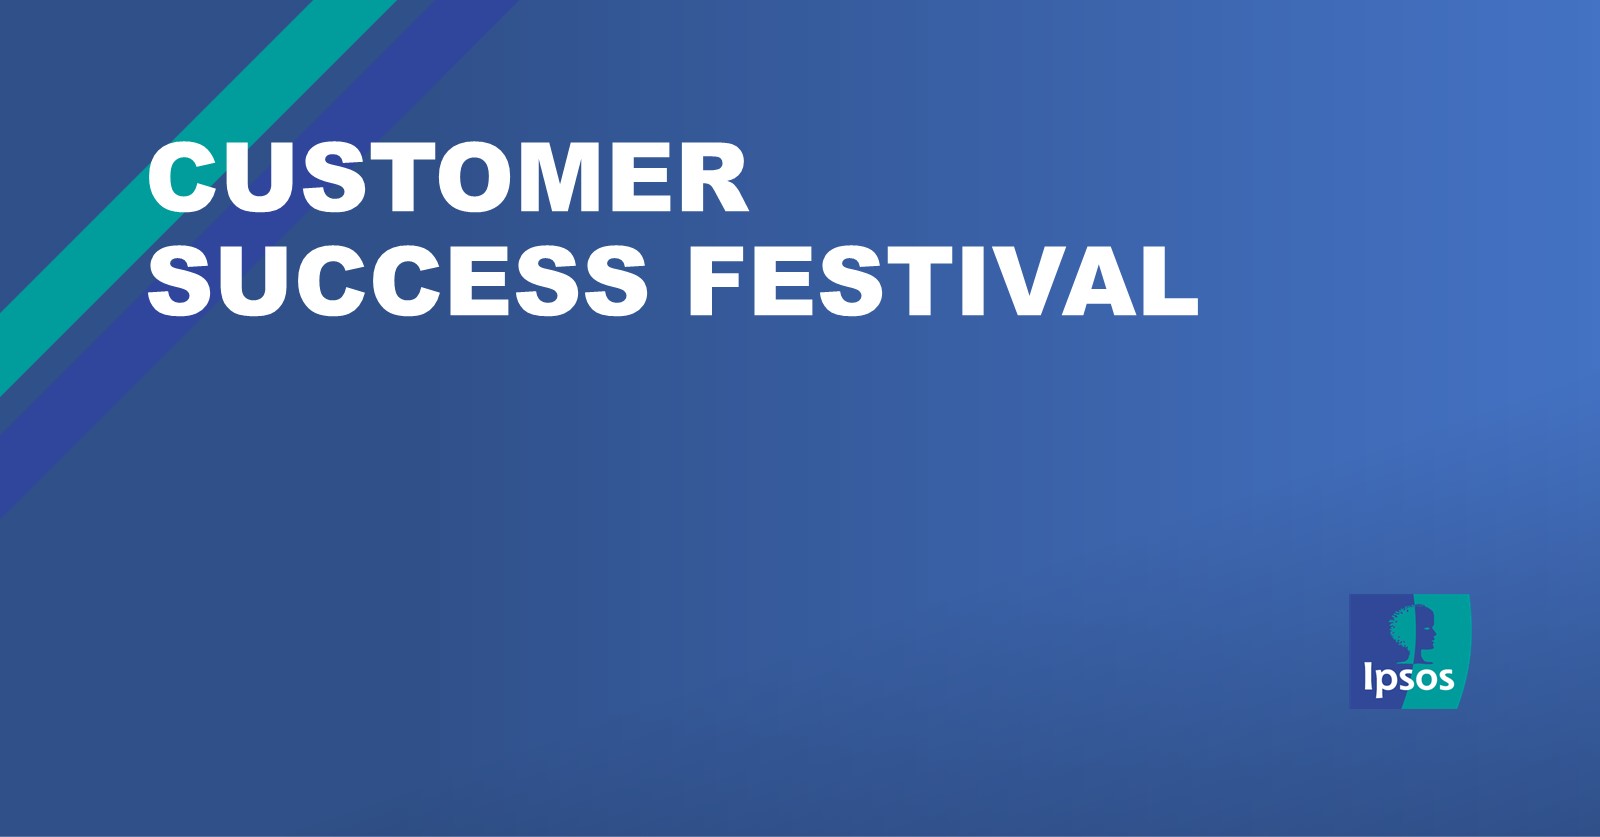 Customer Success Festival Ipsos